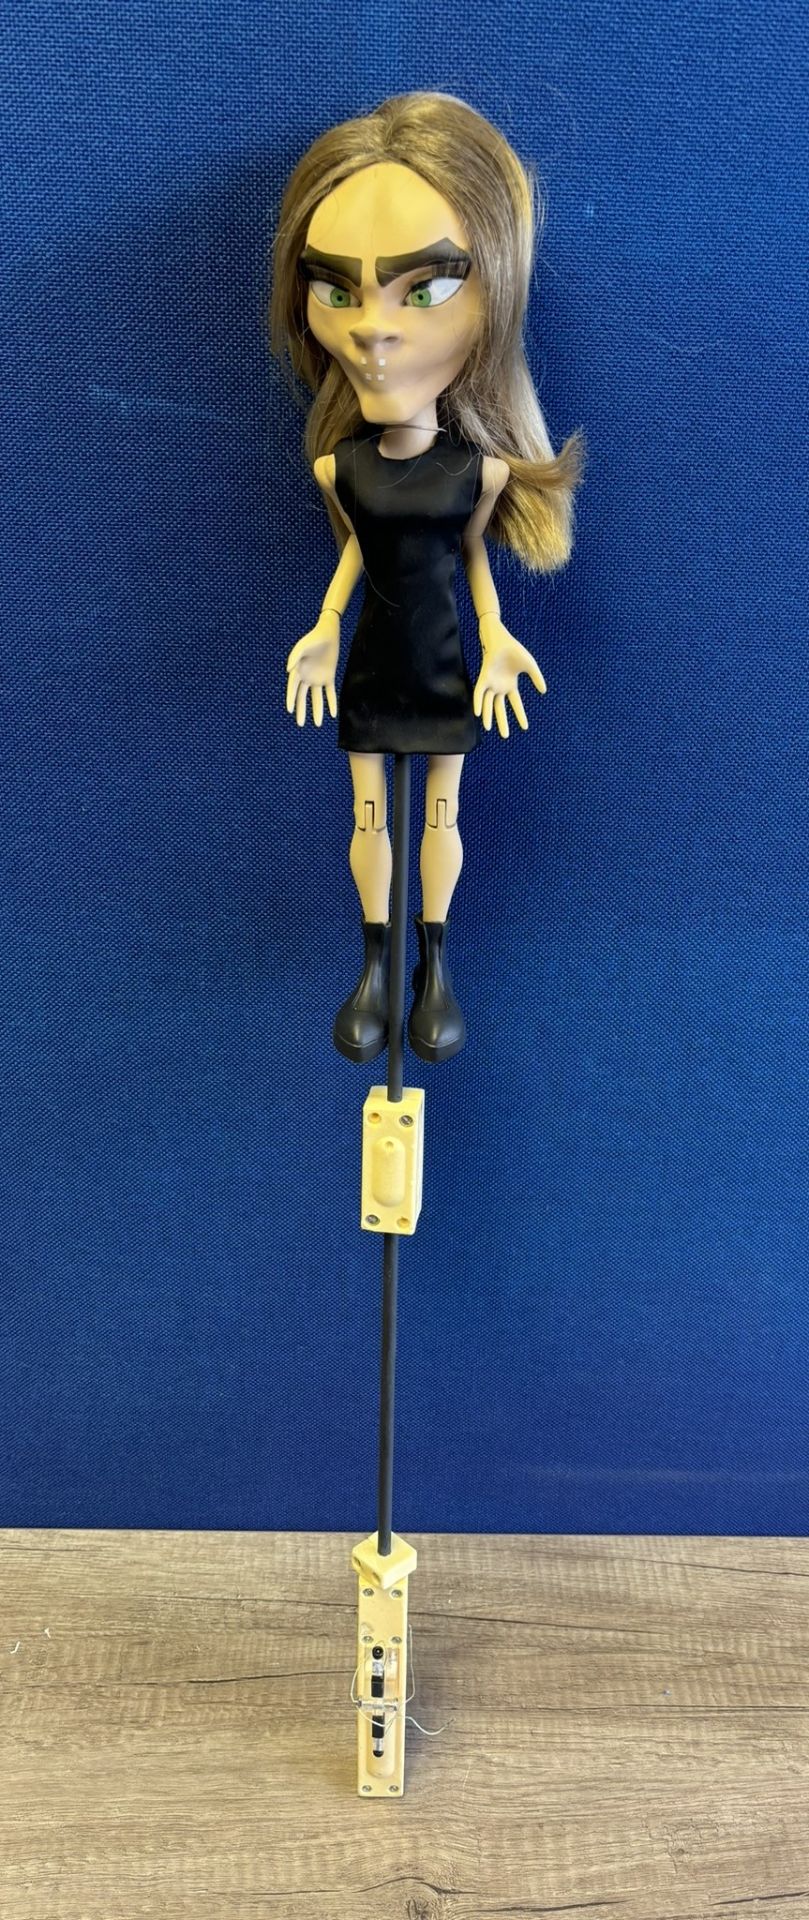 Newzoid puppet - Cara Delevingne - Bild 3 aus 3